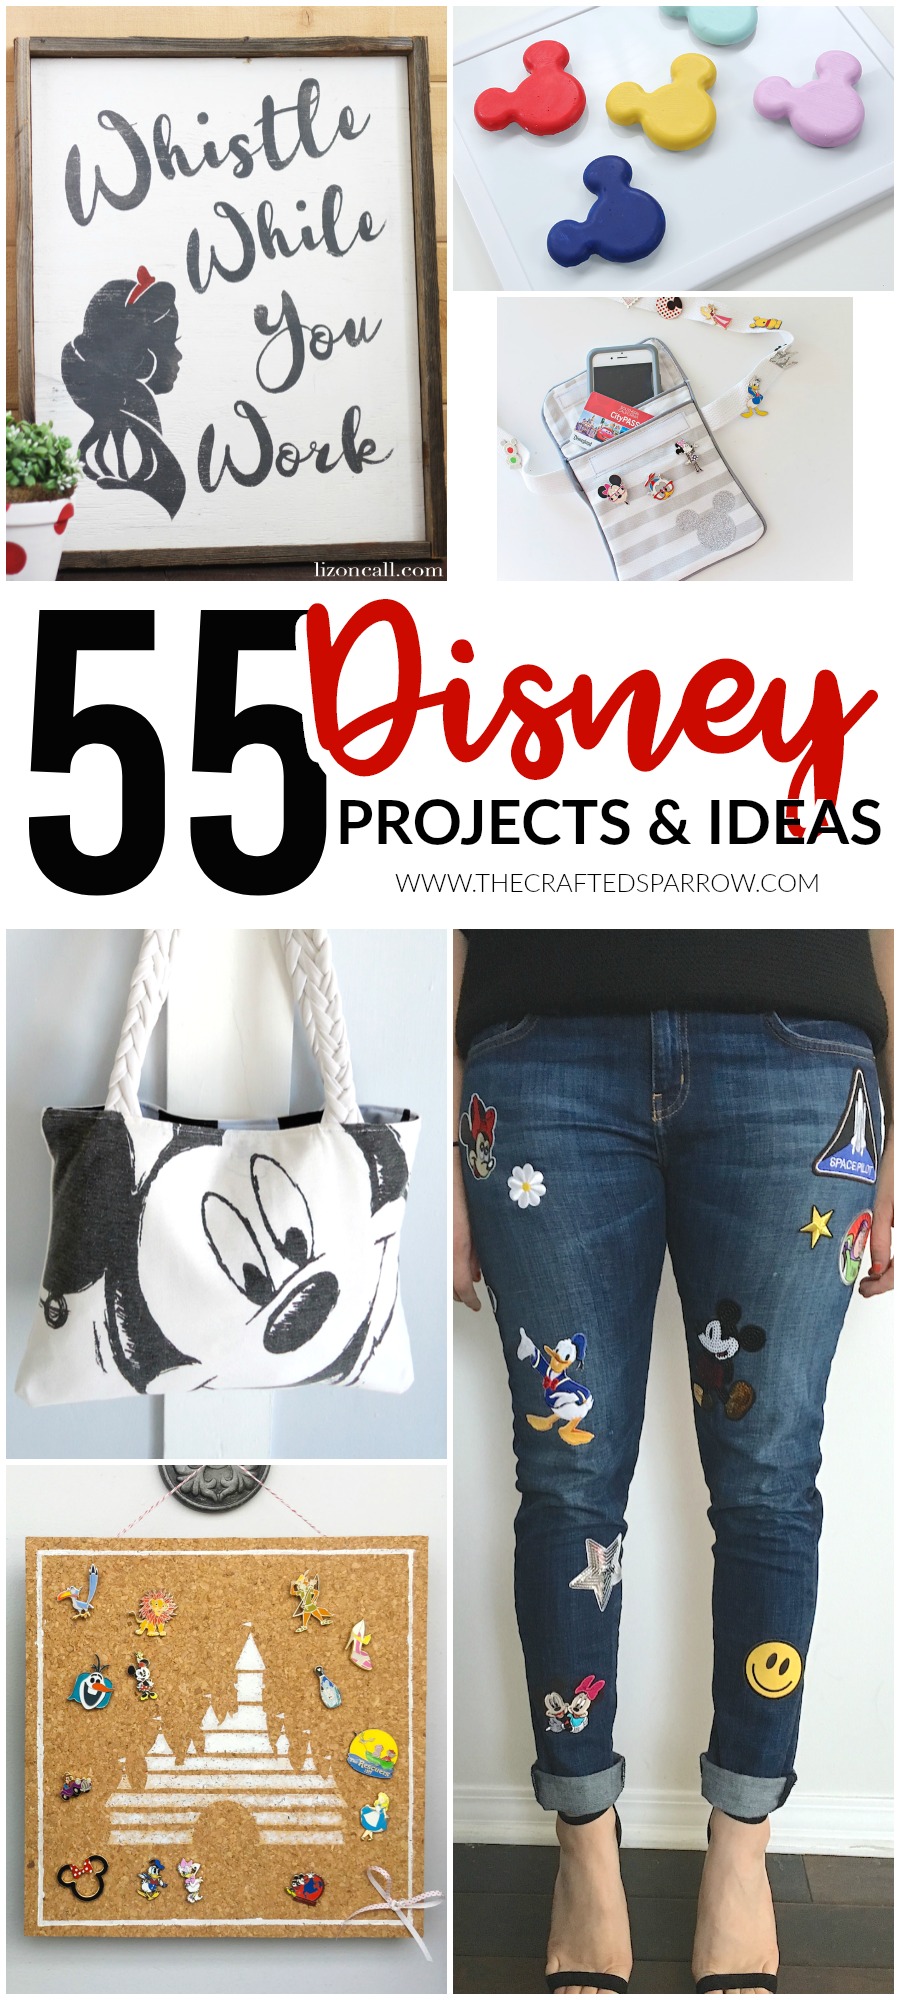 55 Disney Projects & Ideas